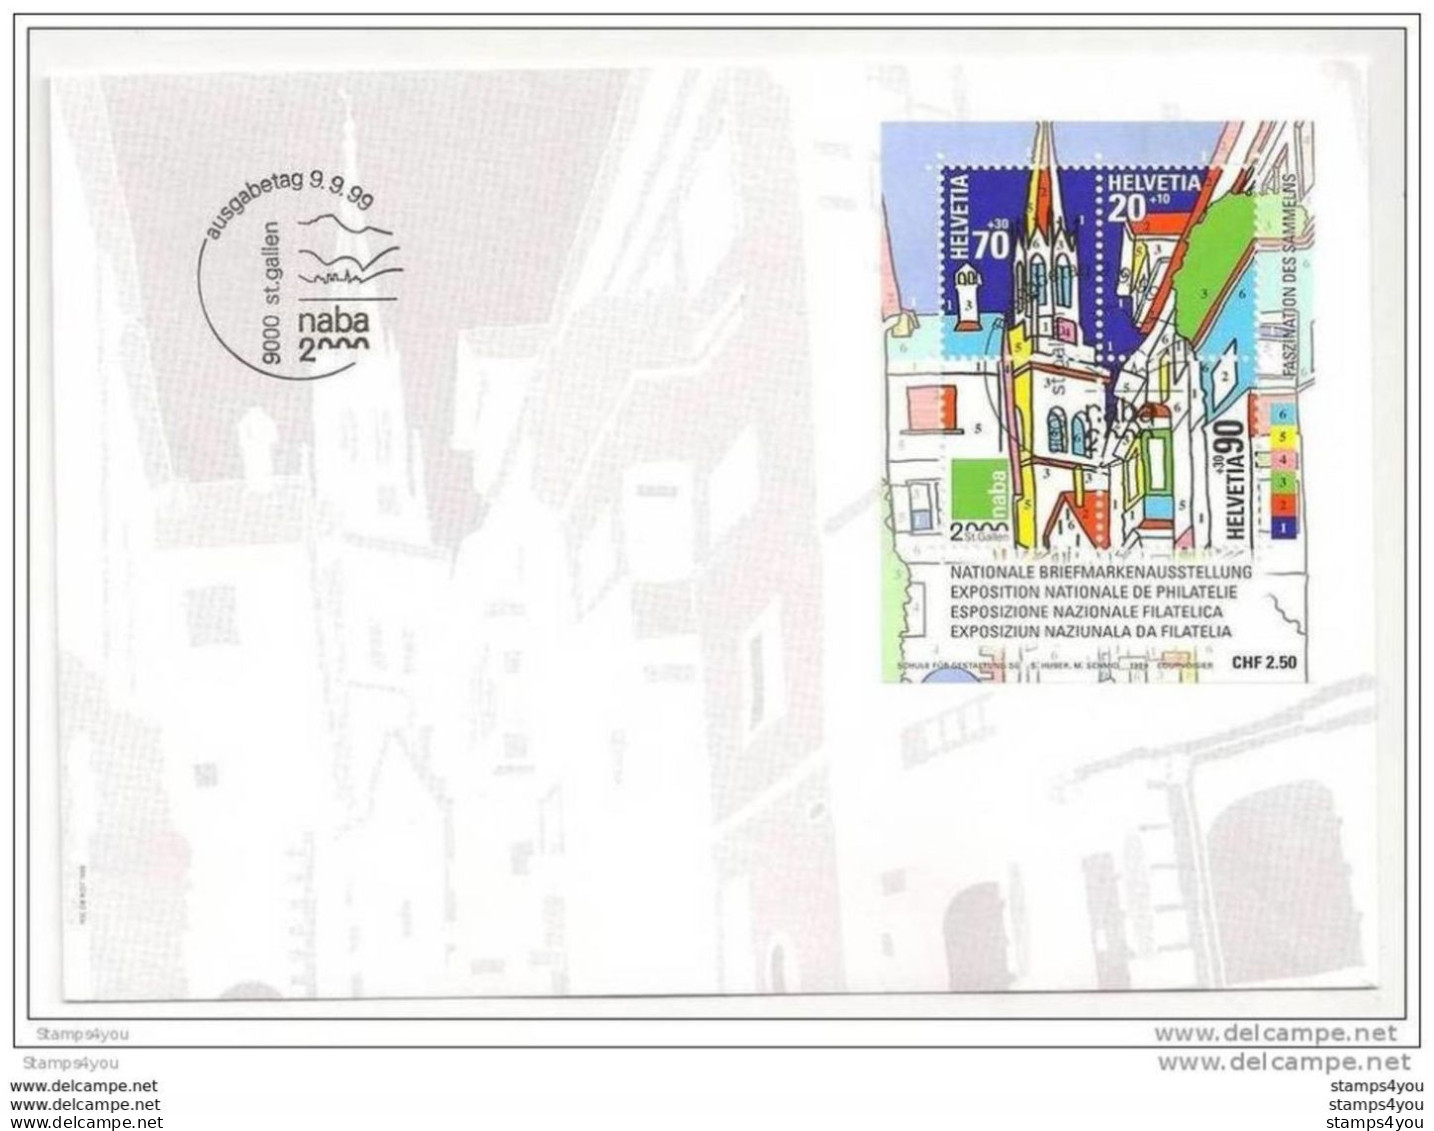 GG - 0211 - Enveloppe Suisse Avec Bloc Expor NABA 2000 St Gallen  9.9.99. - Philatelic Exhibitions